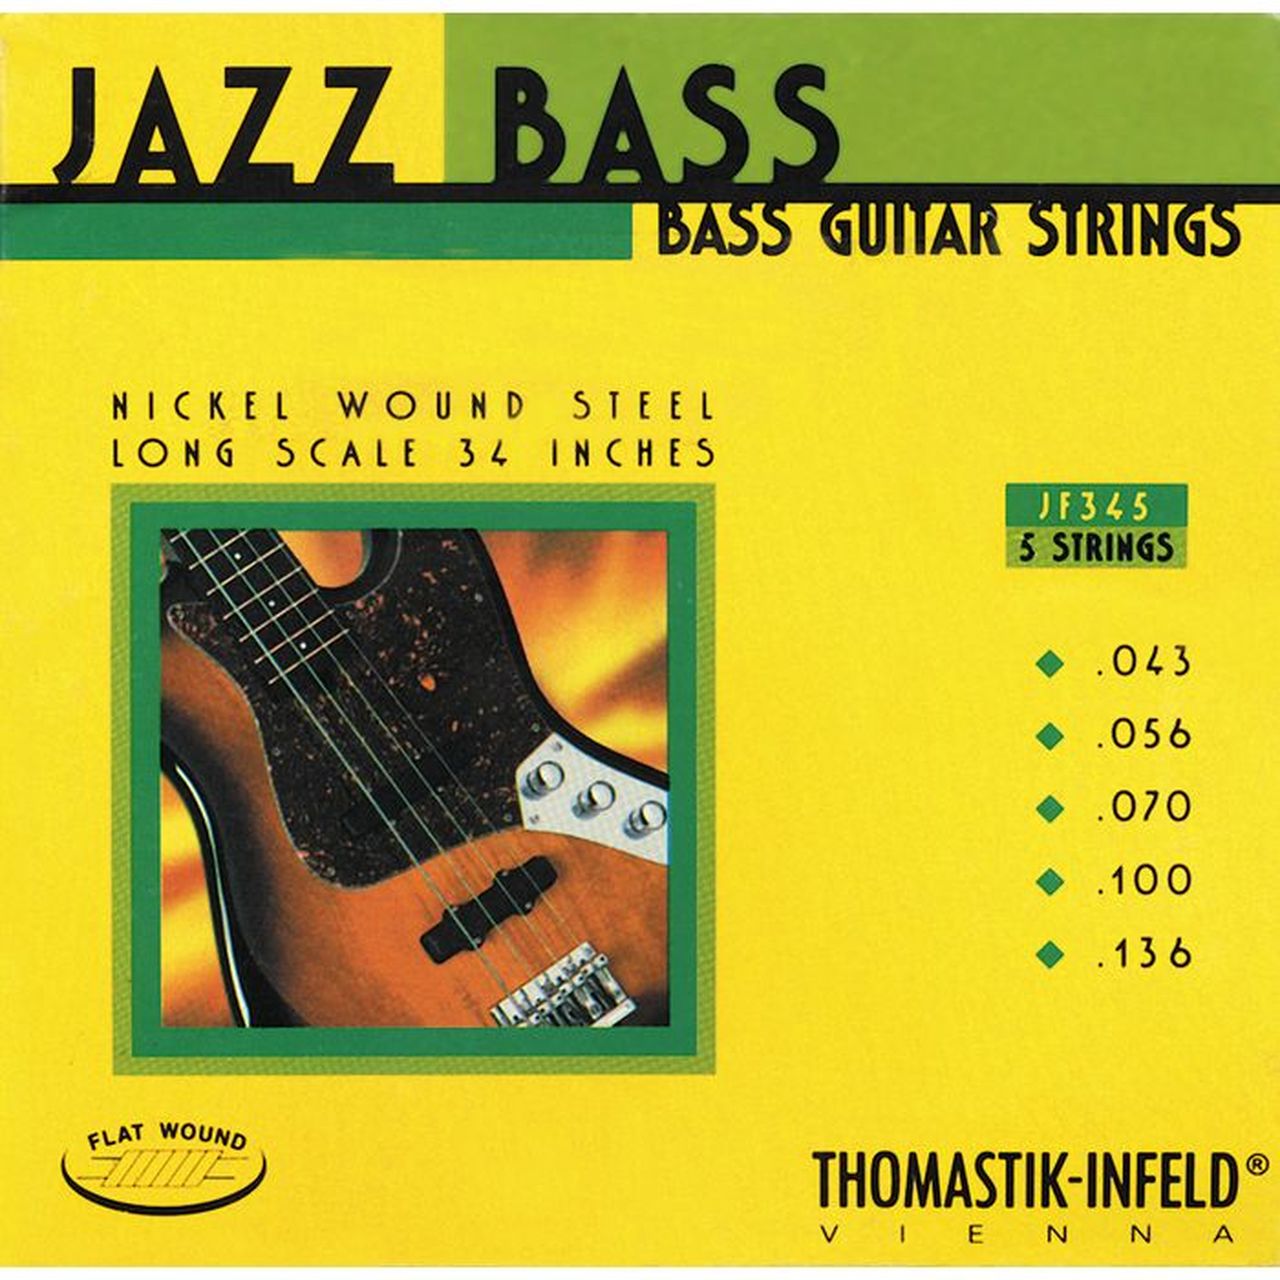 Thomastik Jazz Flat Wound 5 String Bass set, .043 - .136. - T